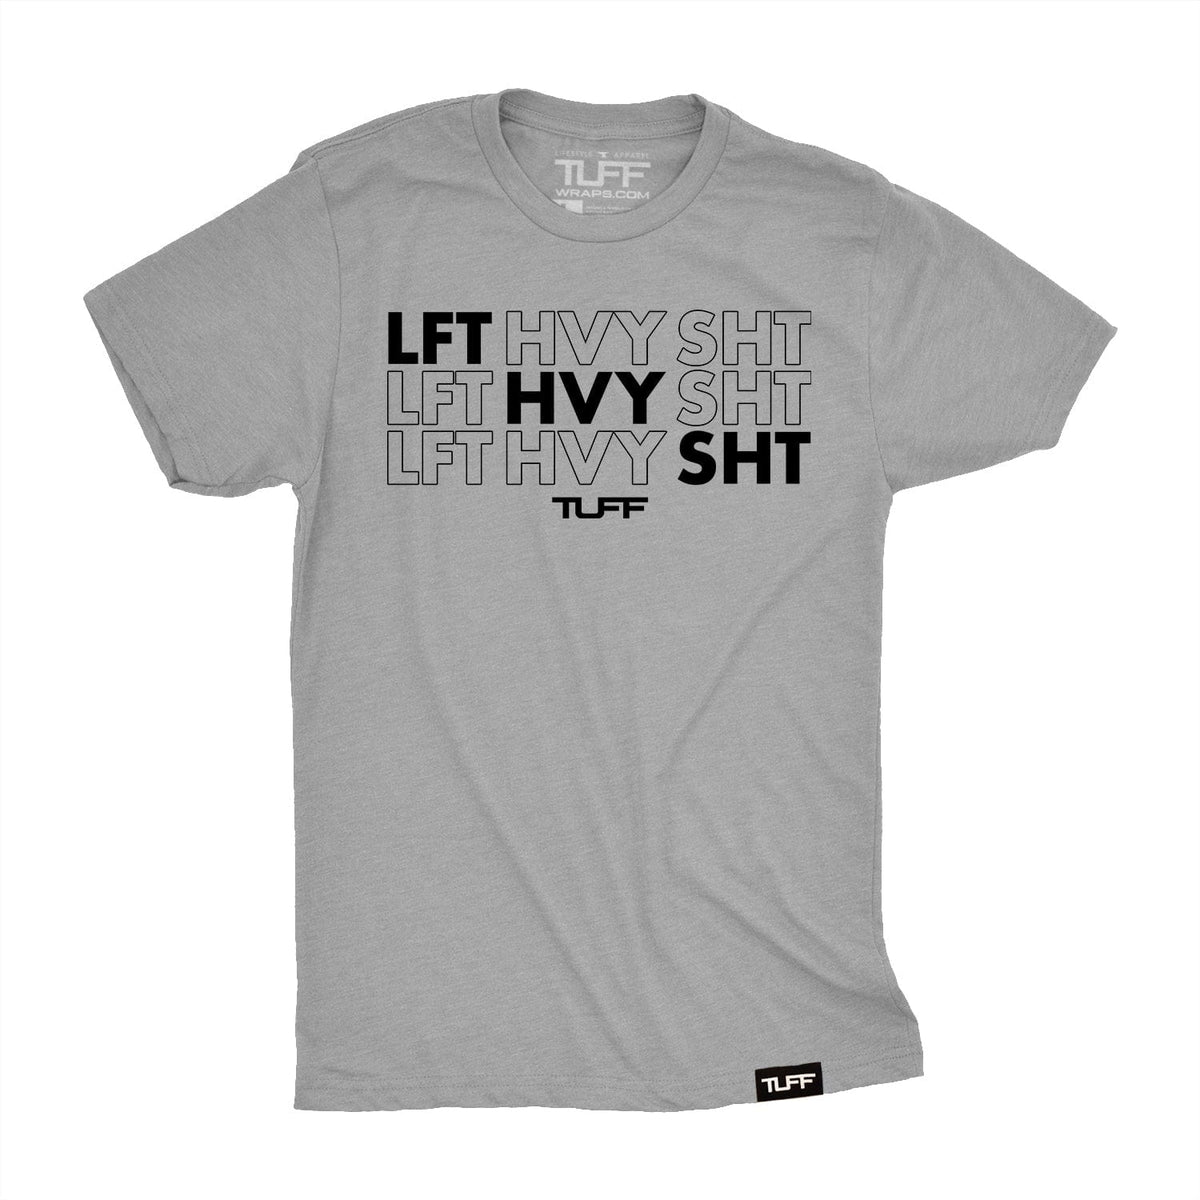 LFT HVY SHT Tee S / Heather Gray TuffWraps.com